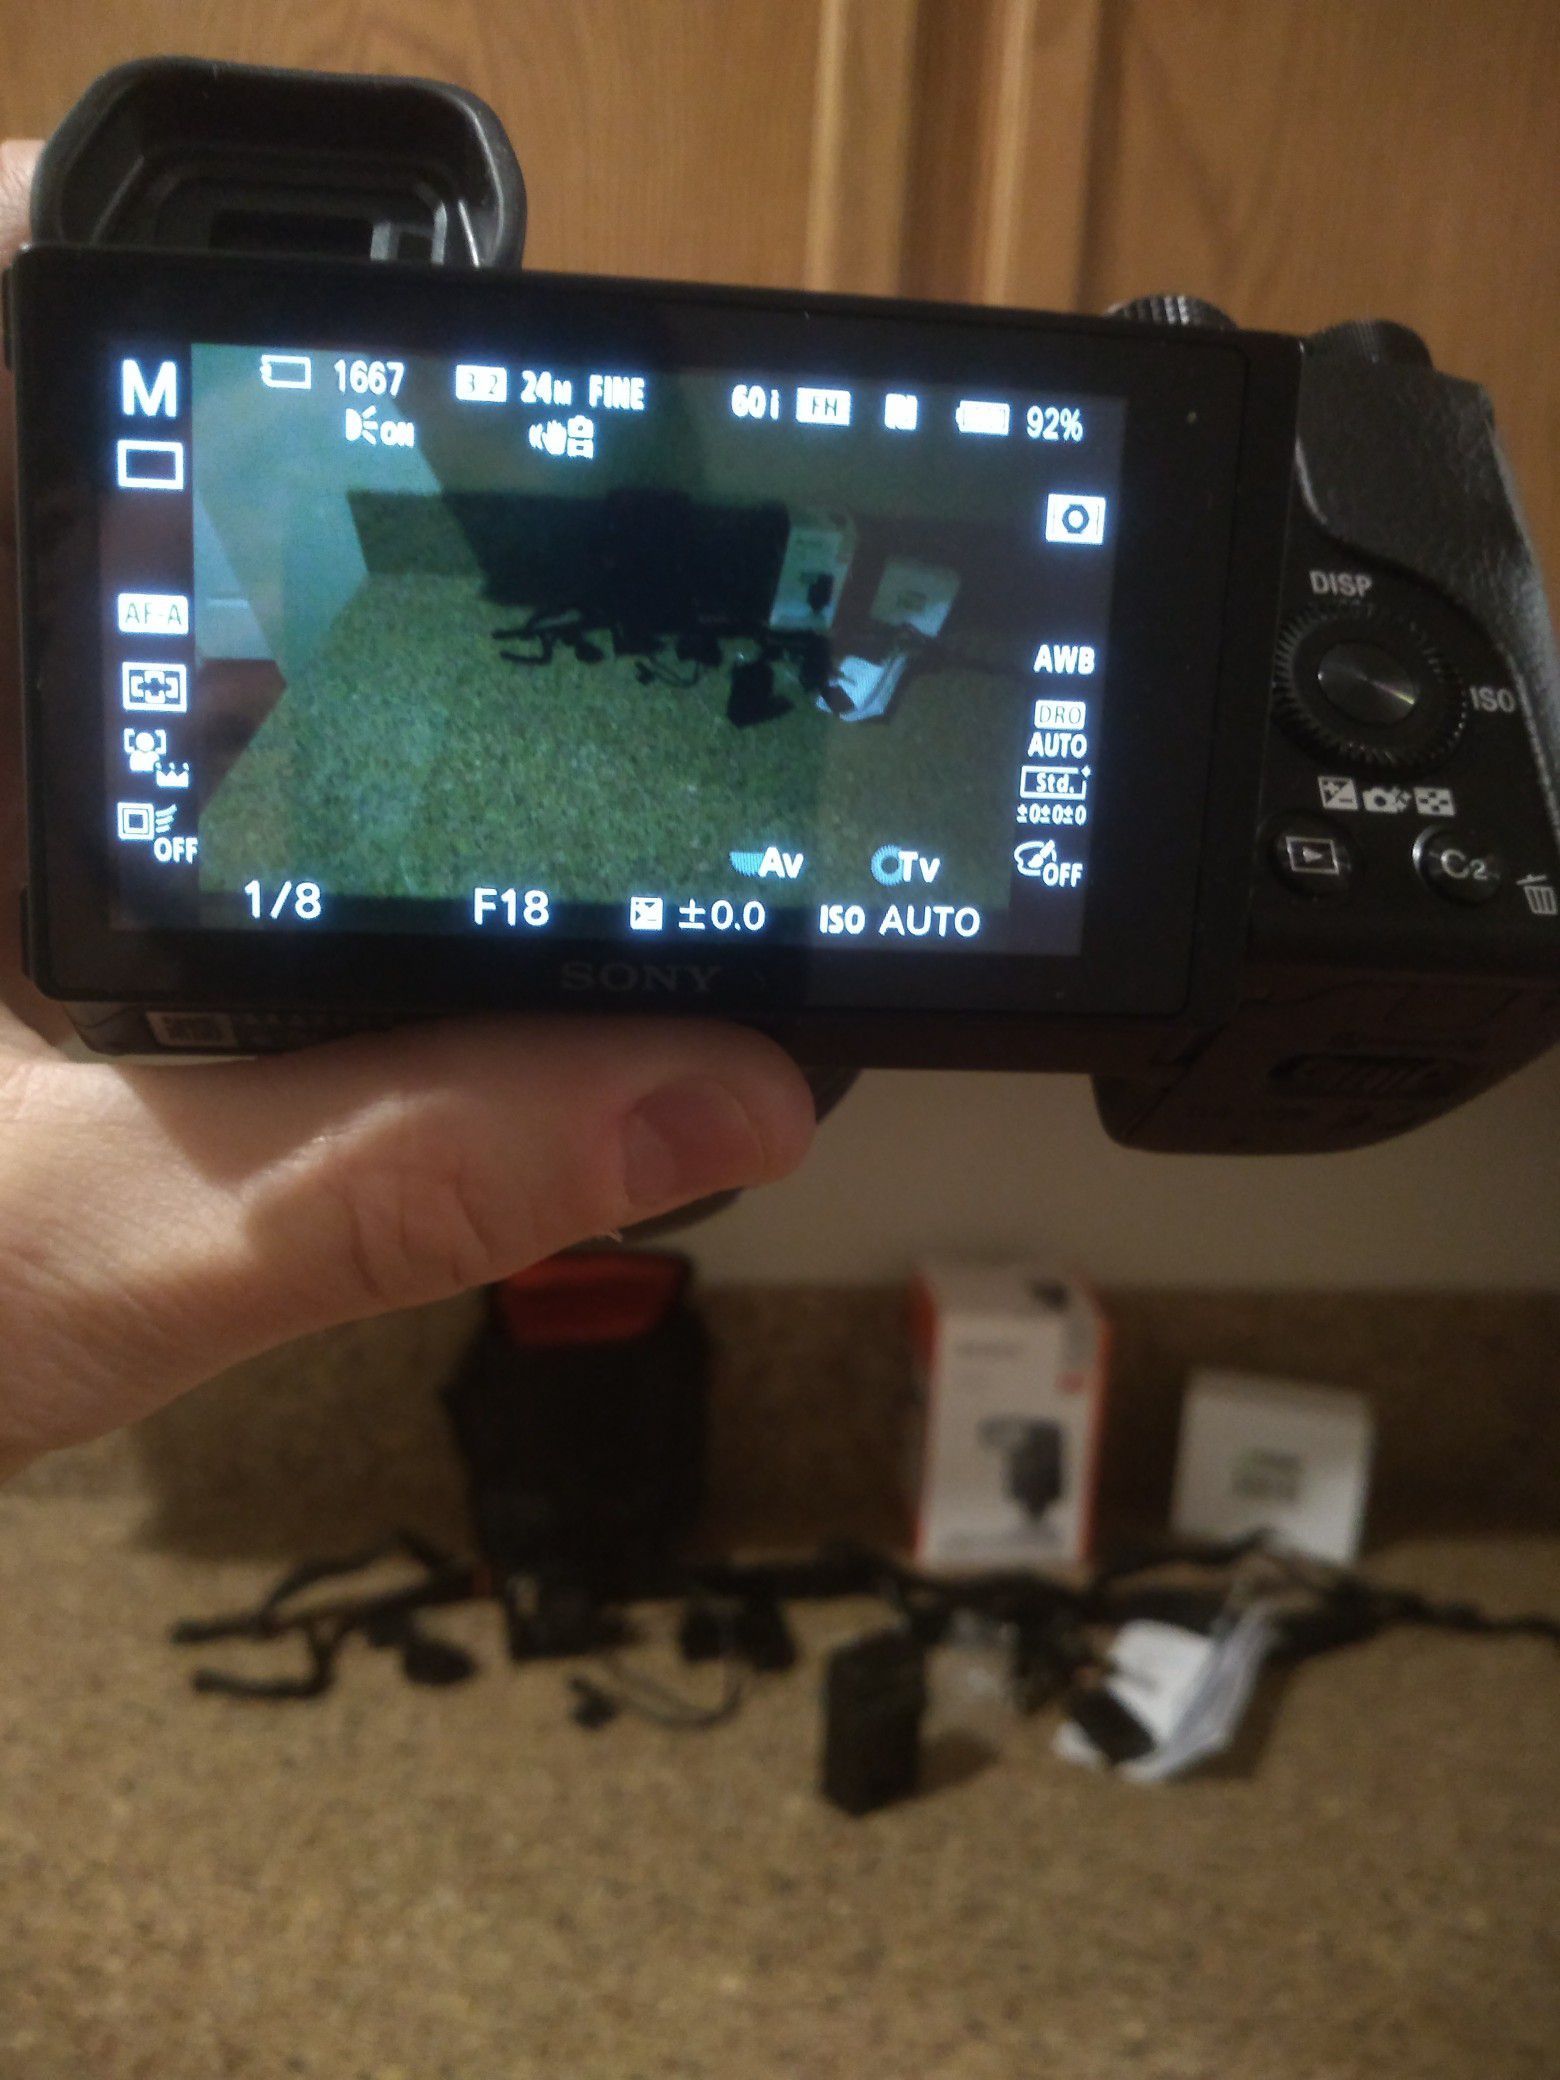 Sony A6000 Digital Camera Mirrorless w/ Interchangeable Lens & Flash, 64gig card